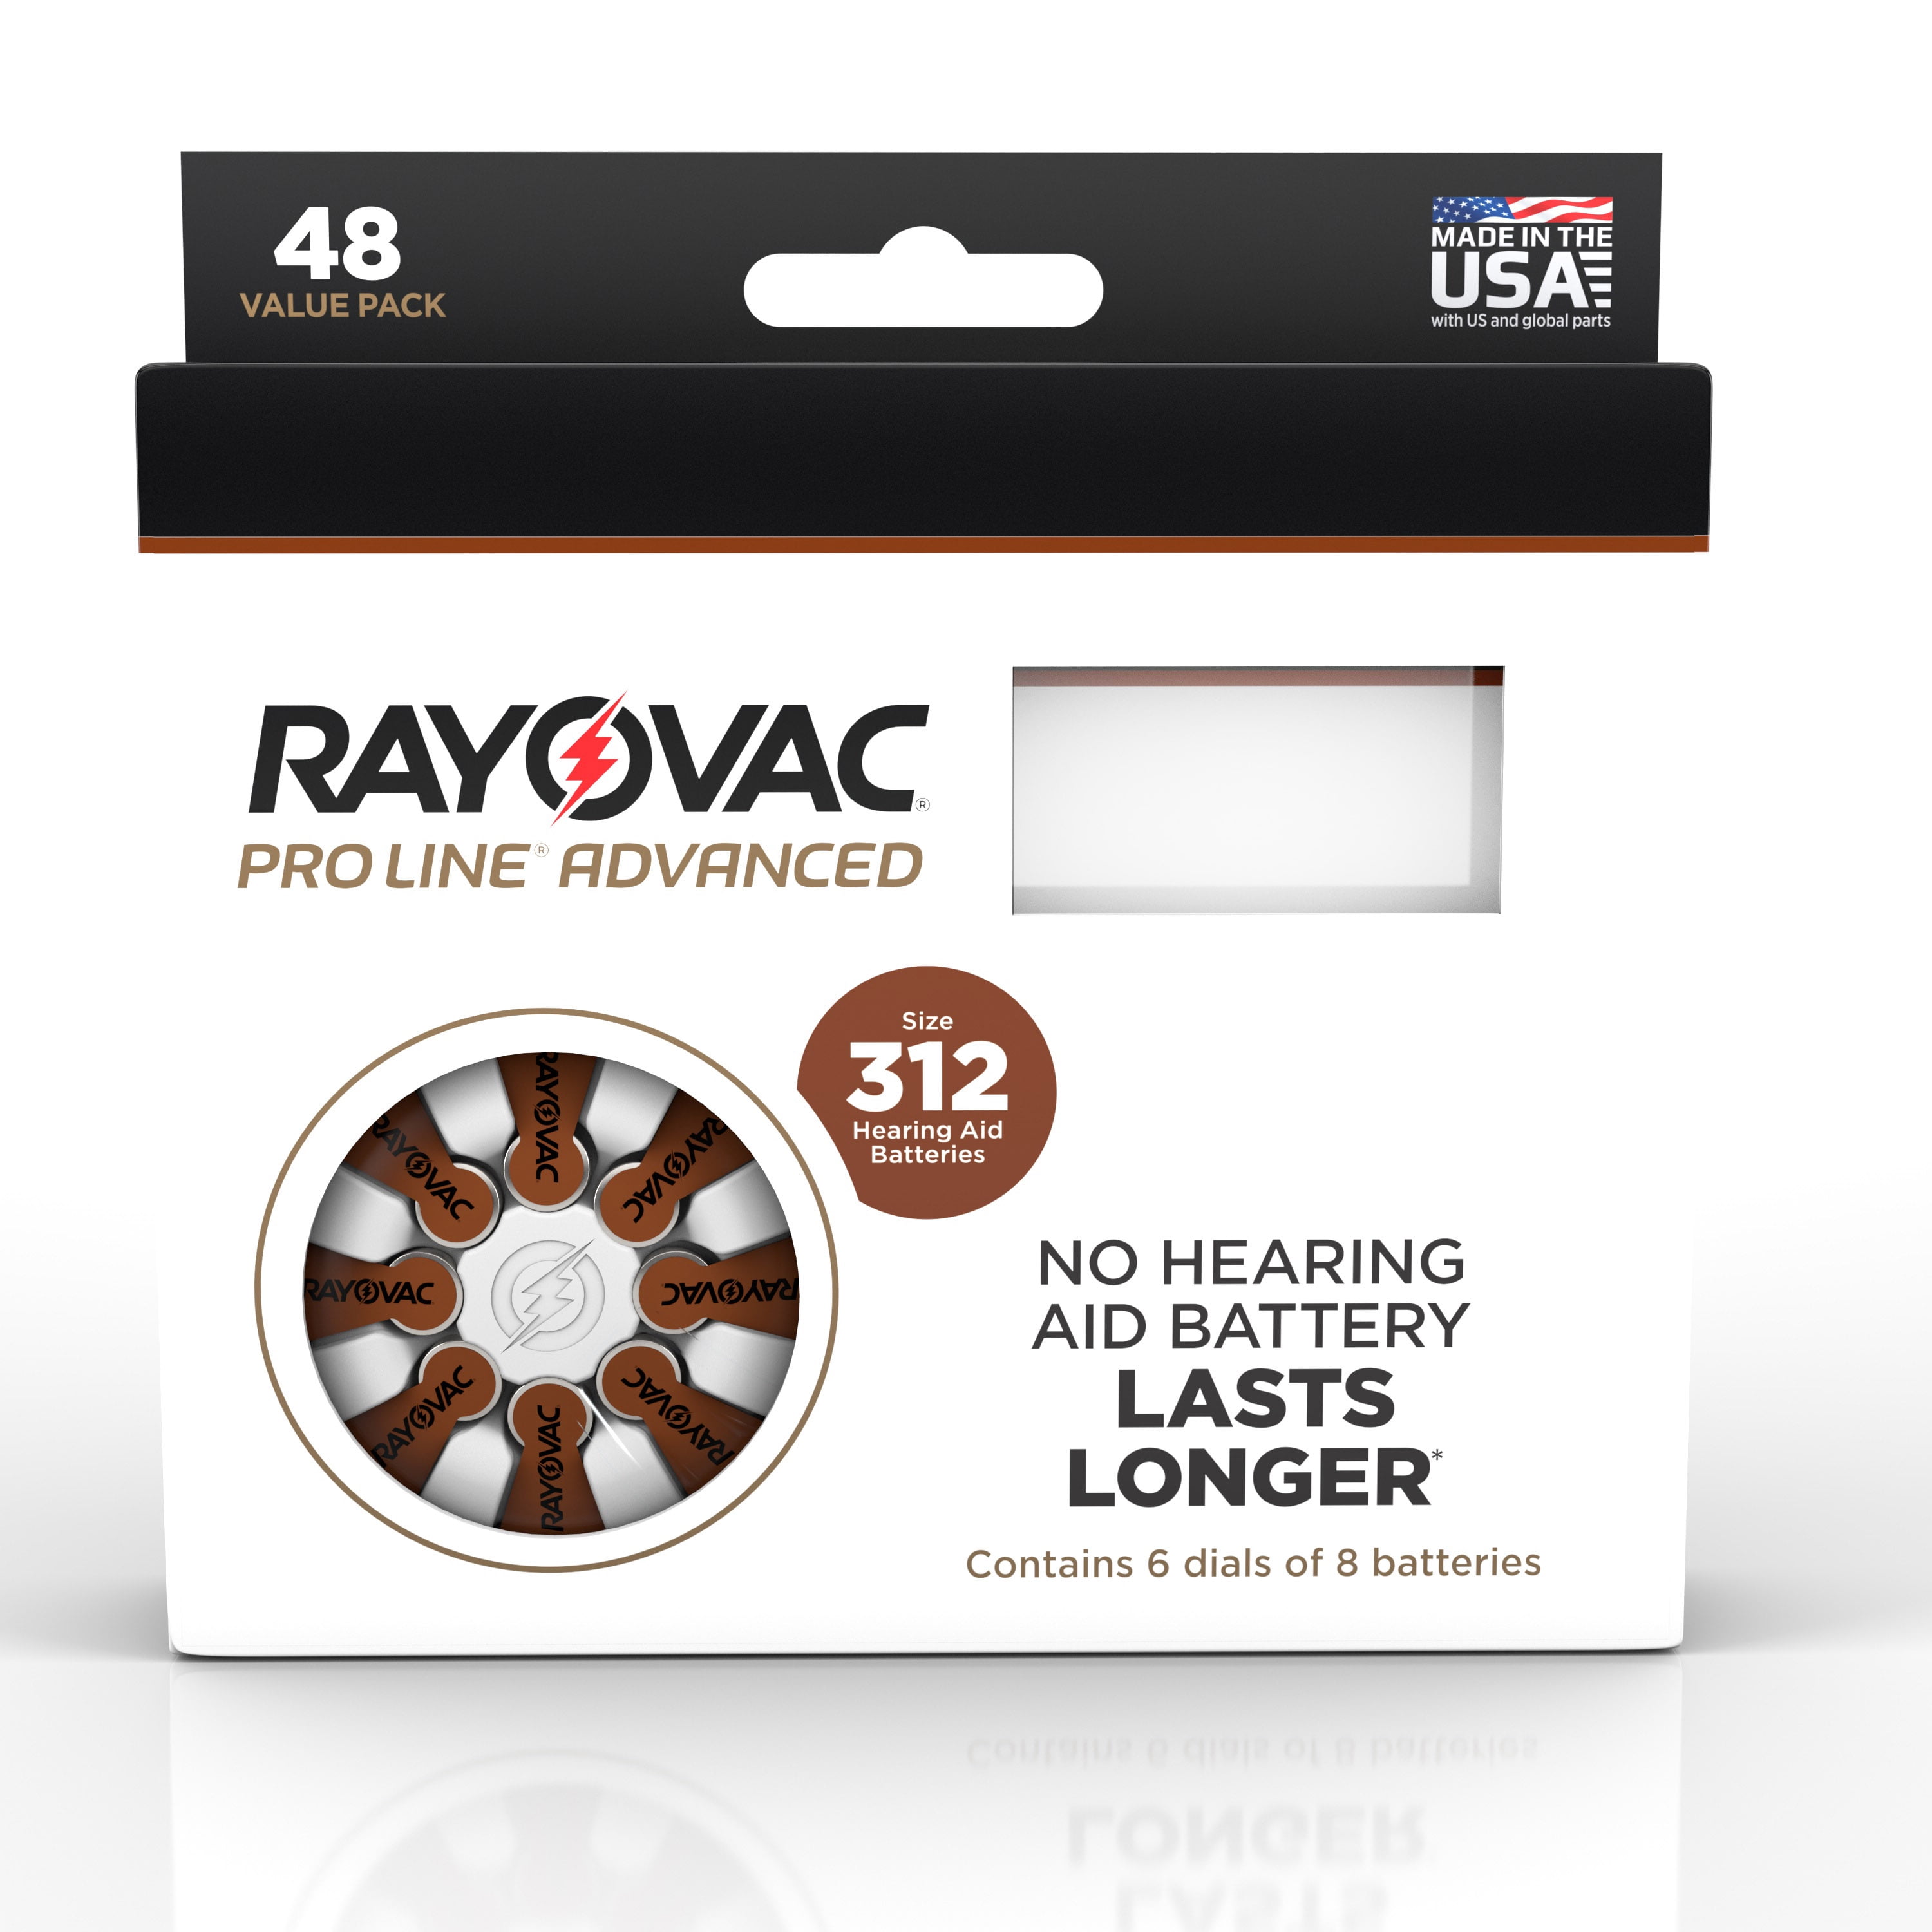 Rayovac ProLine Advanced Hearing Aid Batteries Size 312 